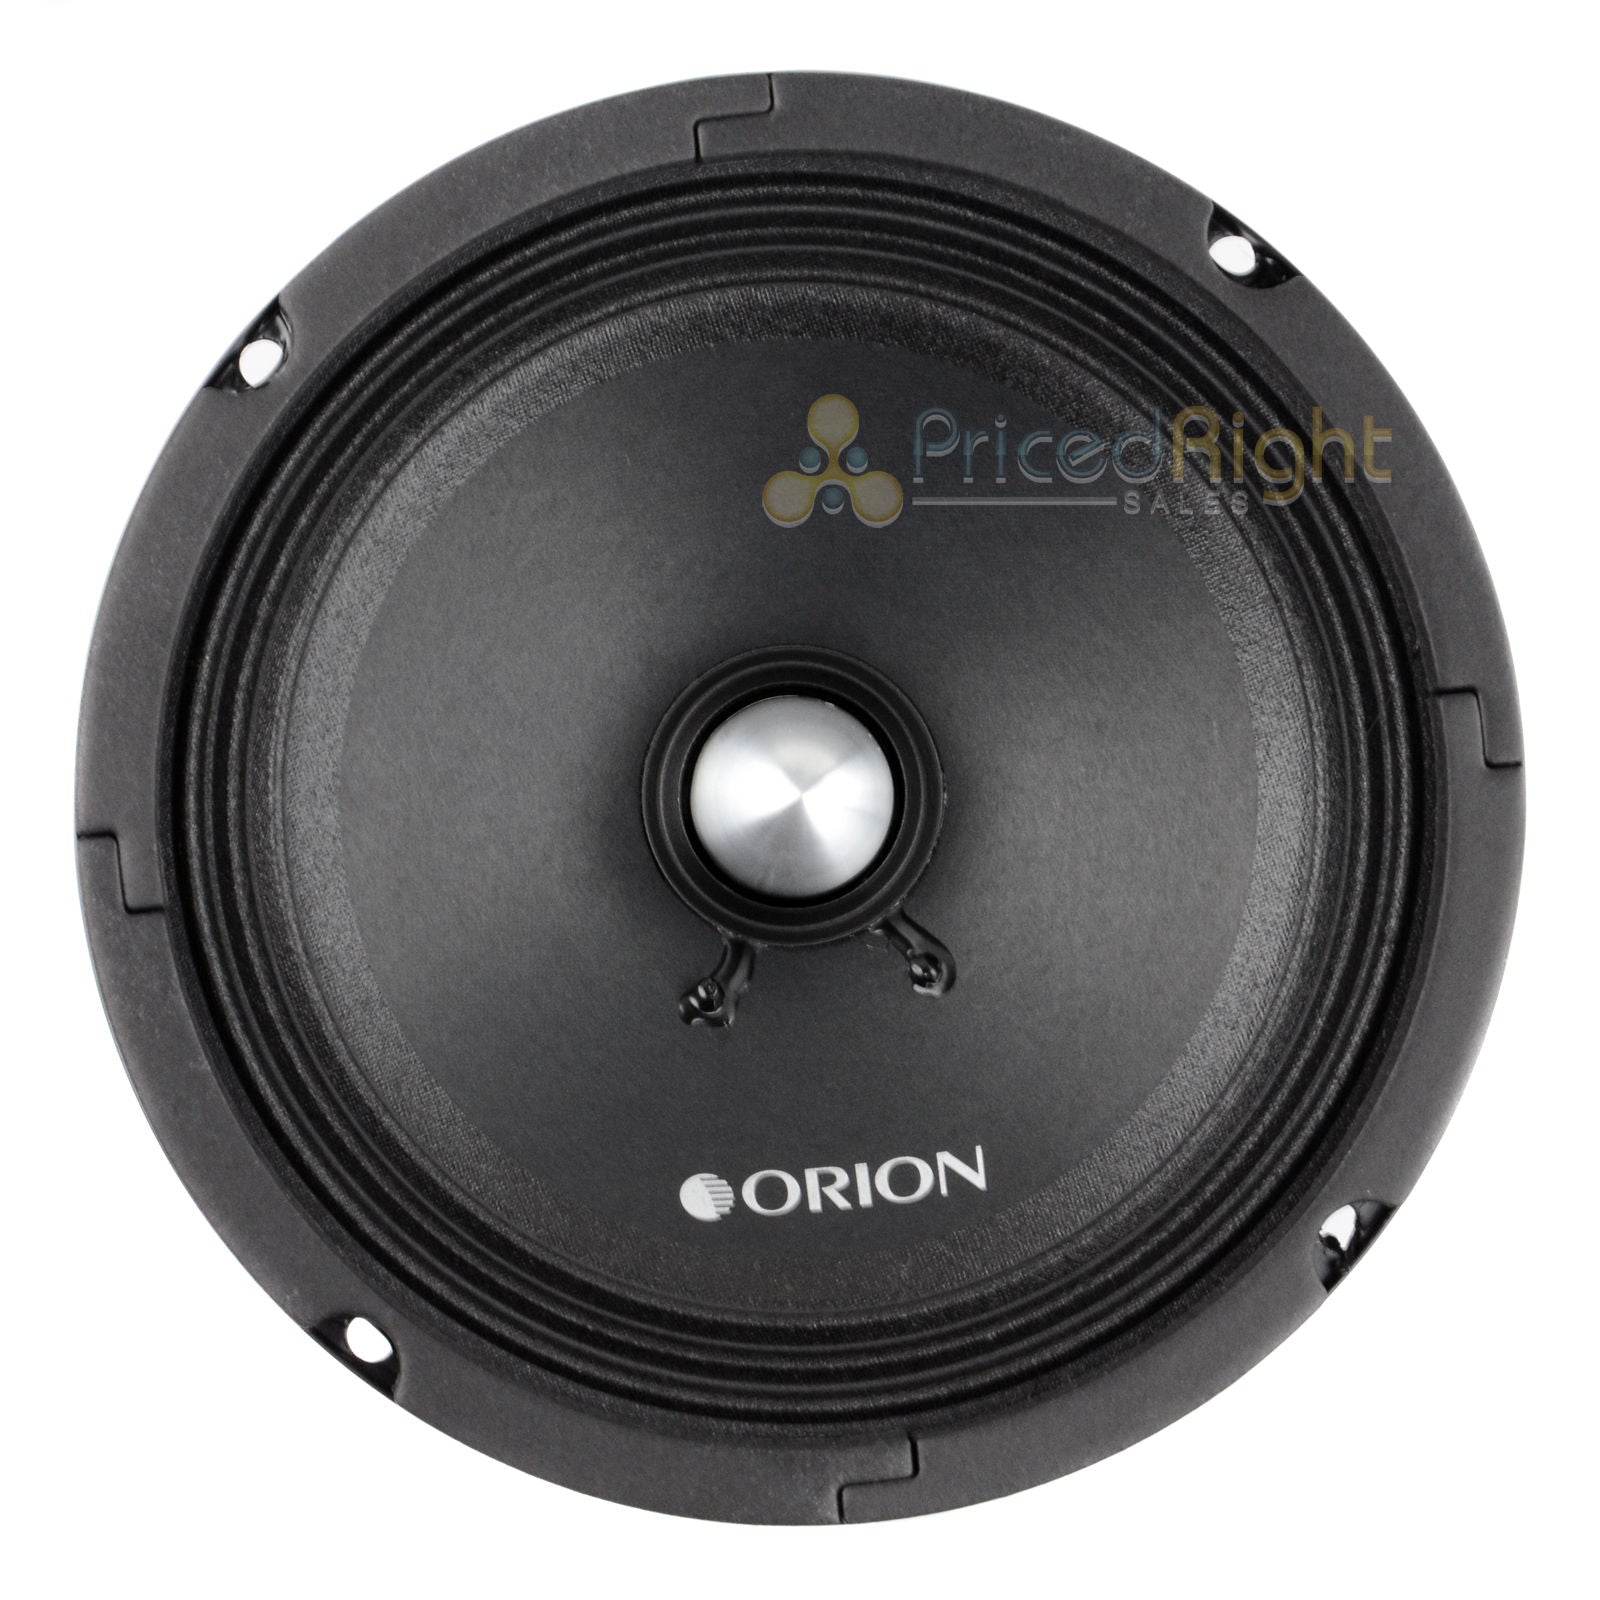 Orion 6.5" Midrange Speakers 600 Watts Max 4 Ohm High Efficiency CT-M6 Pair